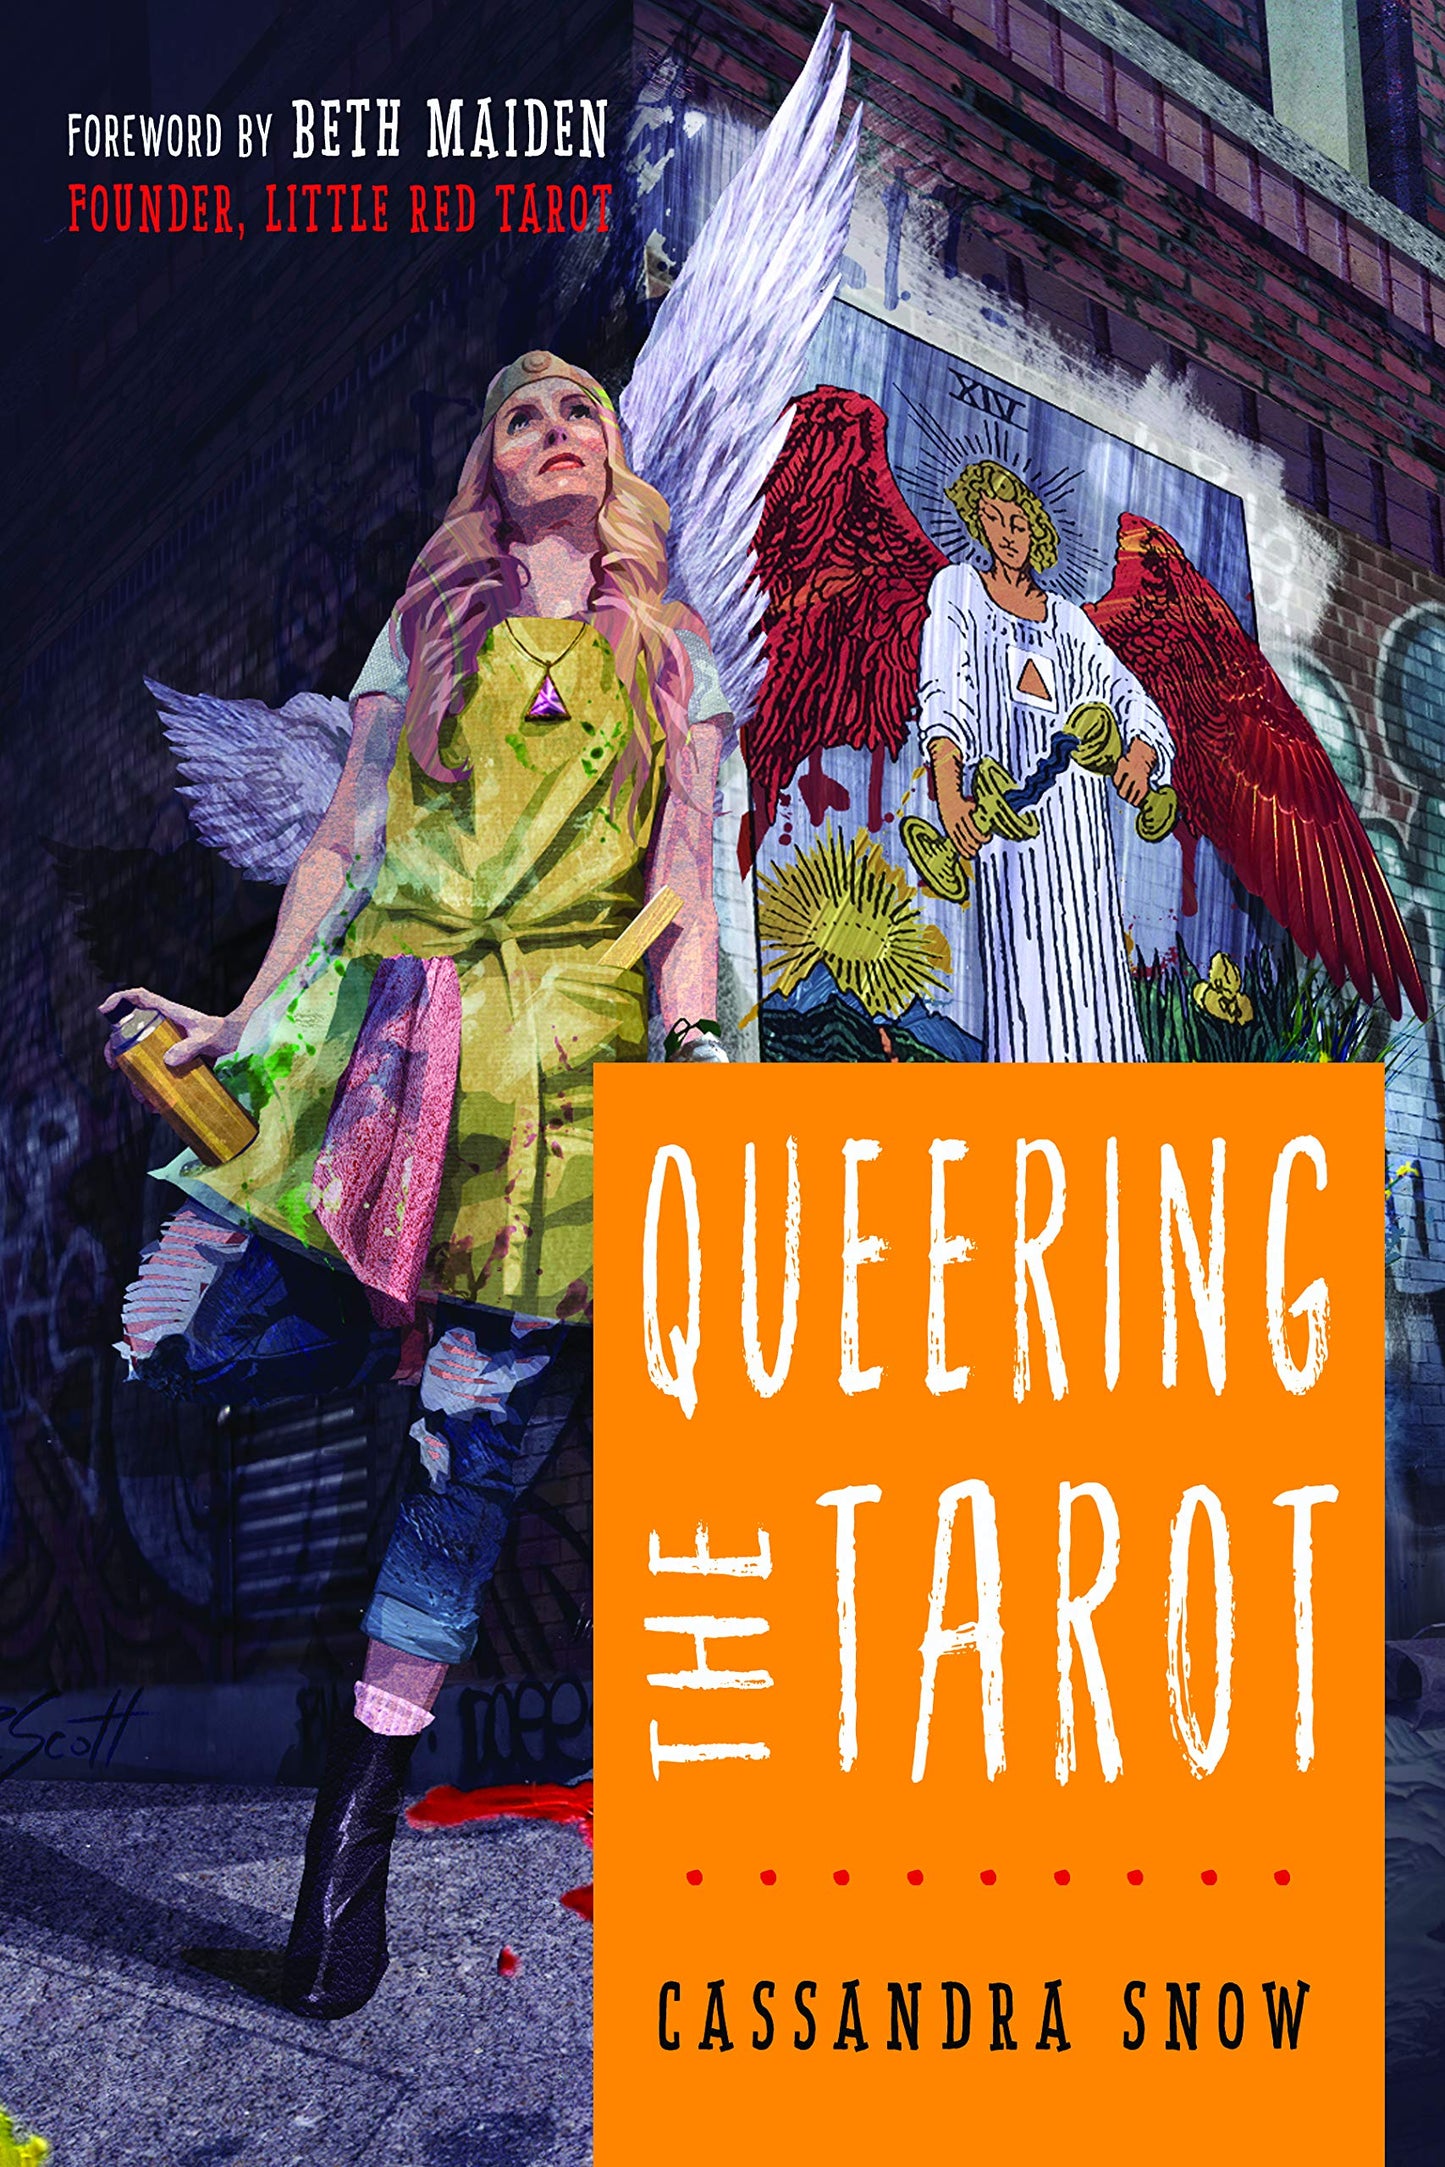 Queering the Tarot, by Cassandra Snow